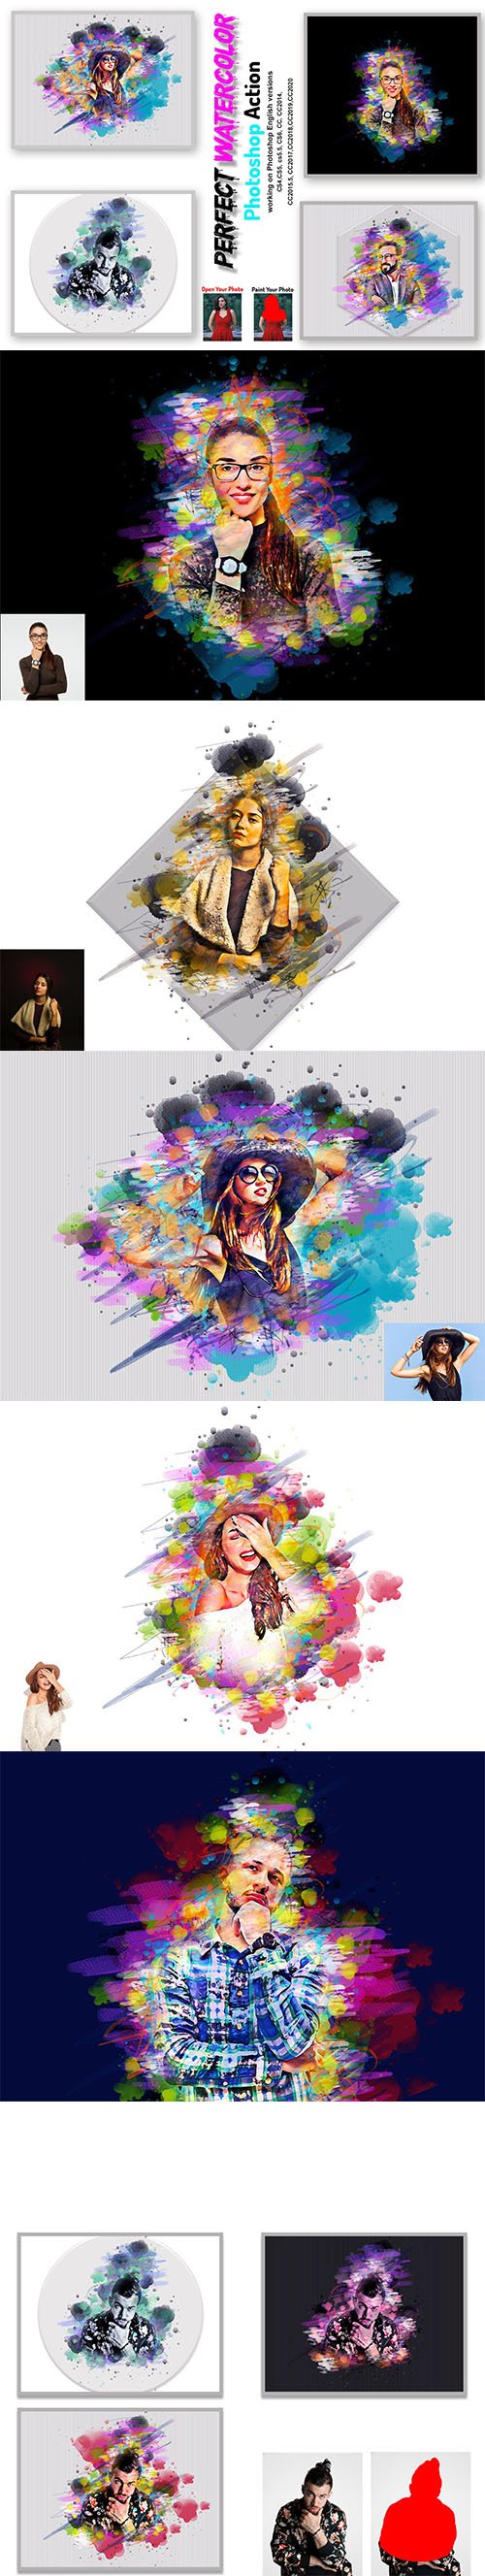 CreativeMarket - Perfect Watercolor Photoshop Action - 5778907